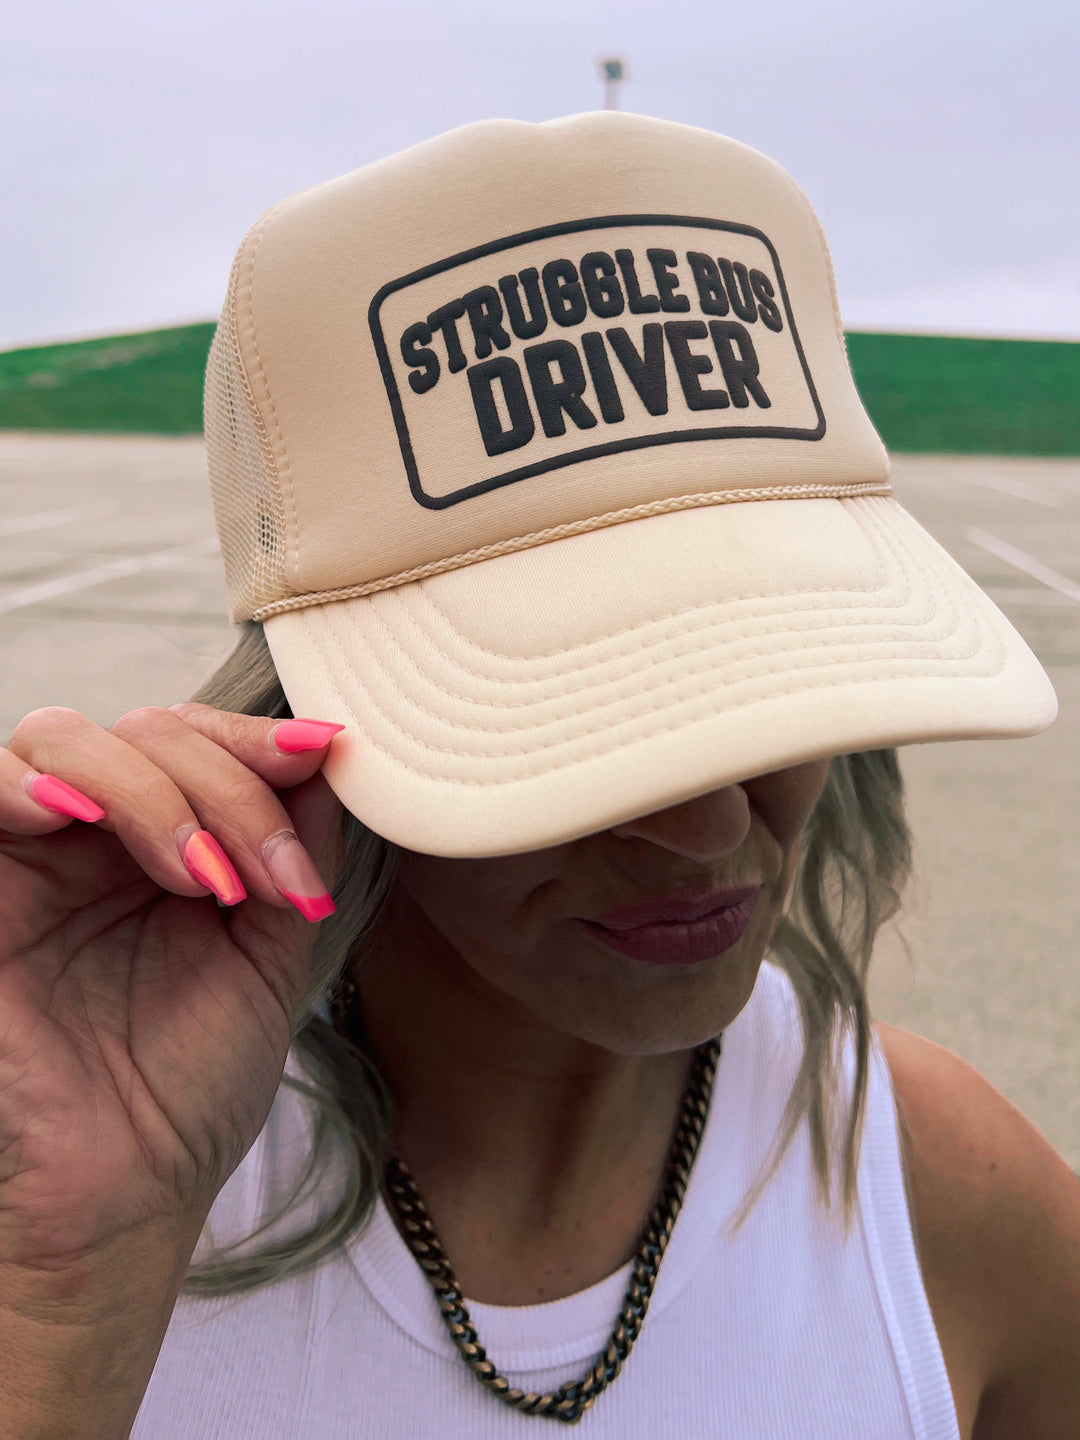 Struggle Bus Driver Trucker Hat, Tan